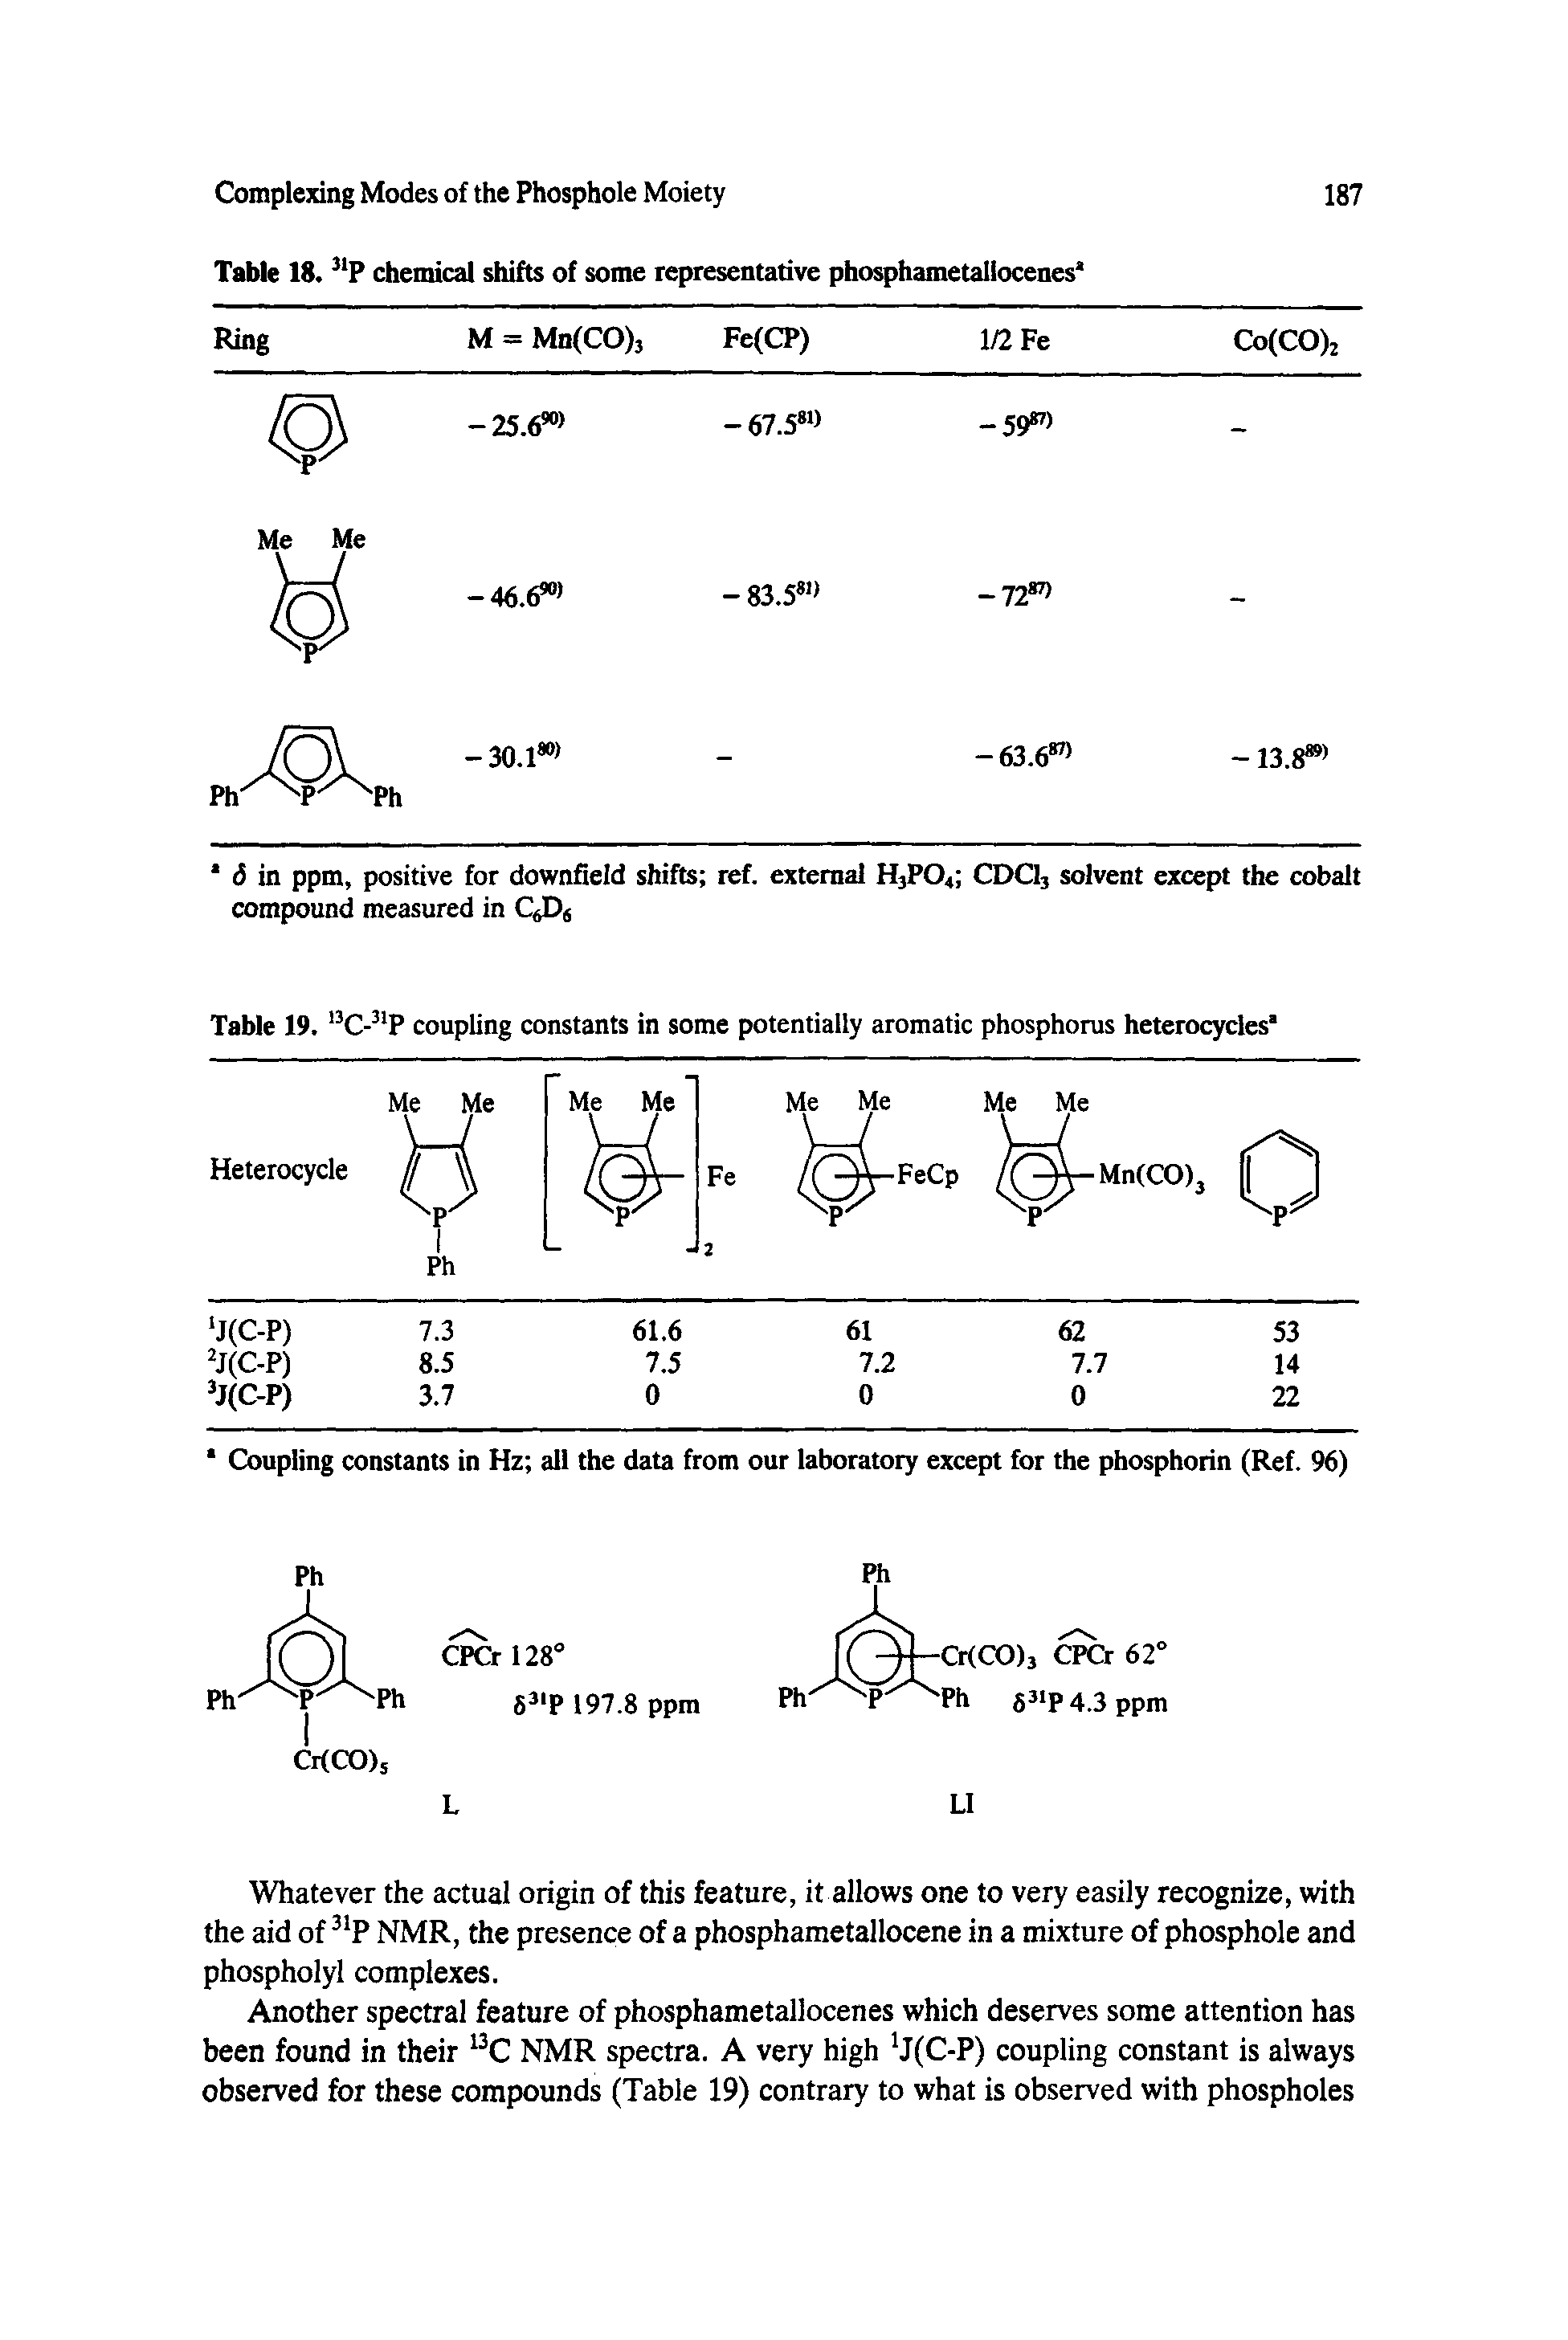 Table 19. C- P coupling constants in some potentially aromatic phosphorus heterocycles ...